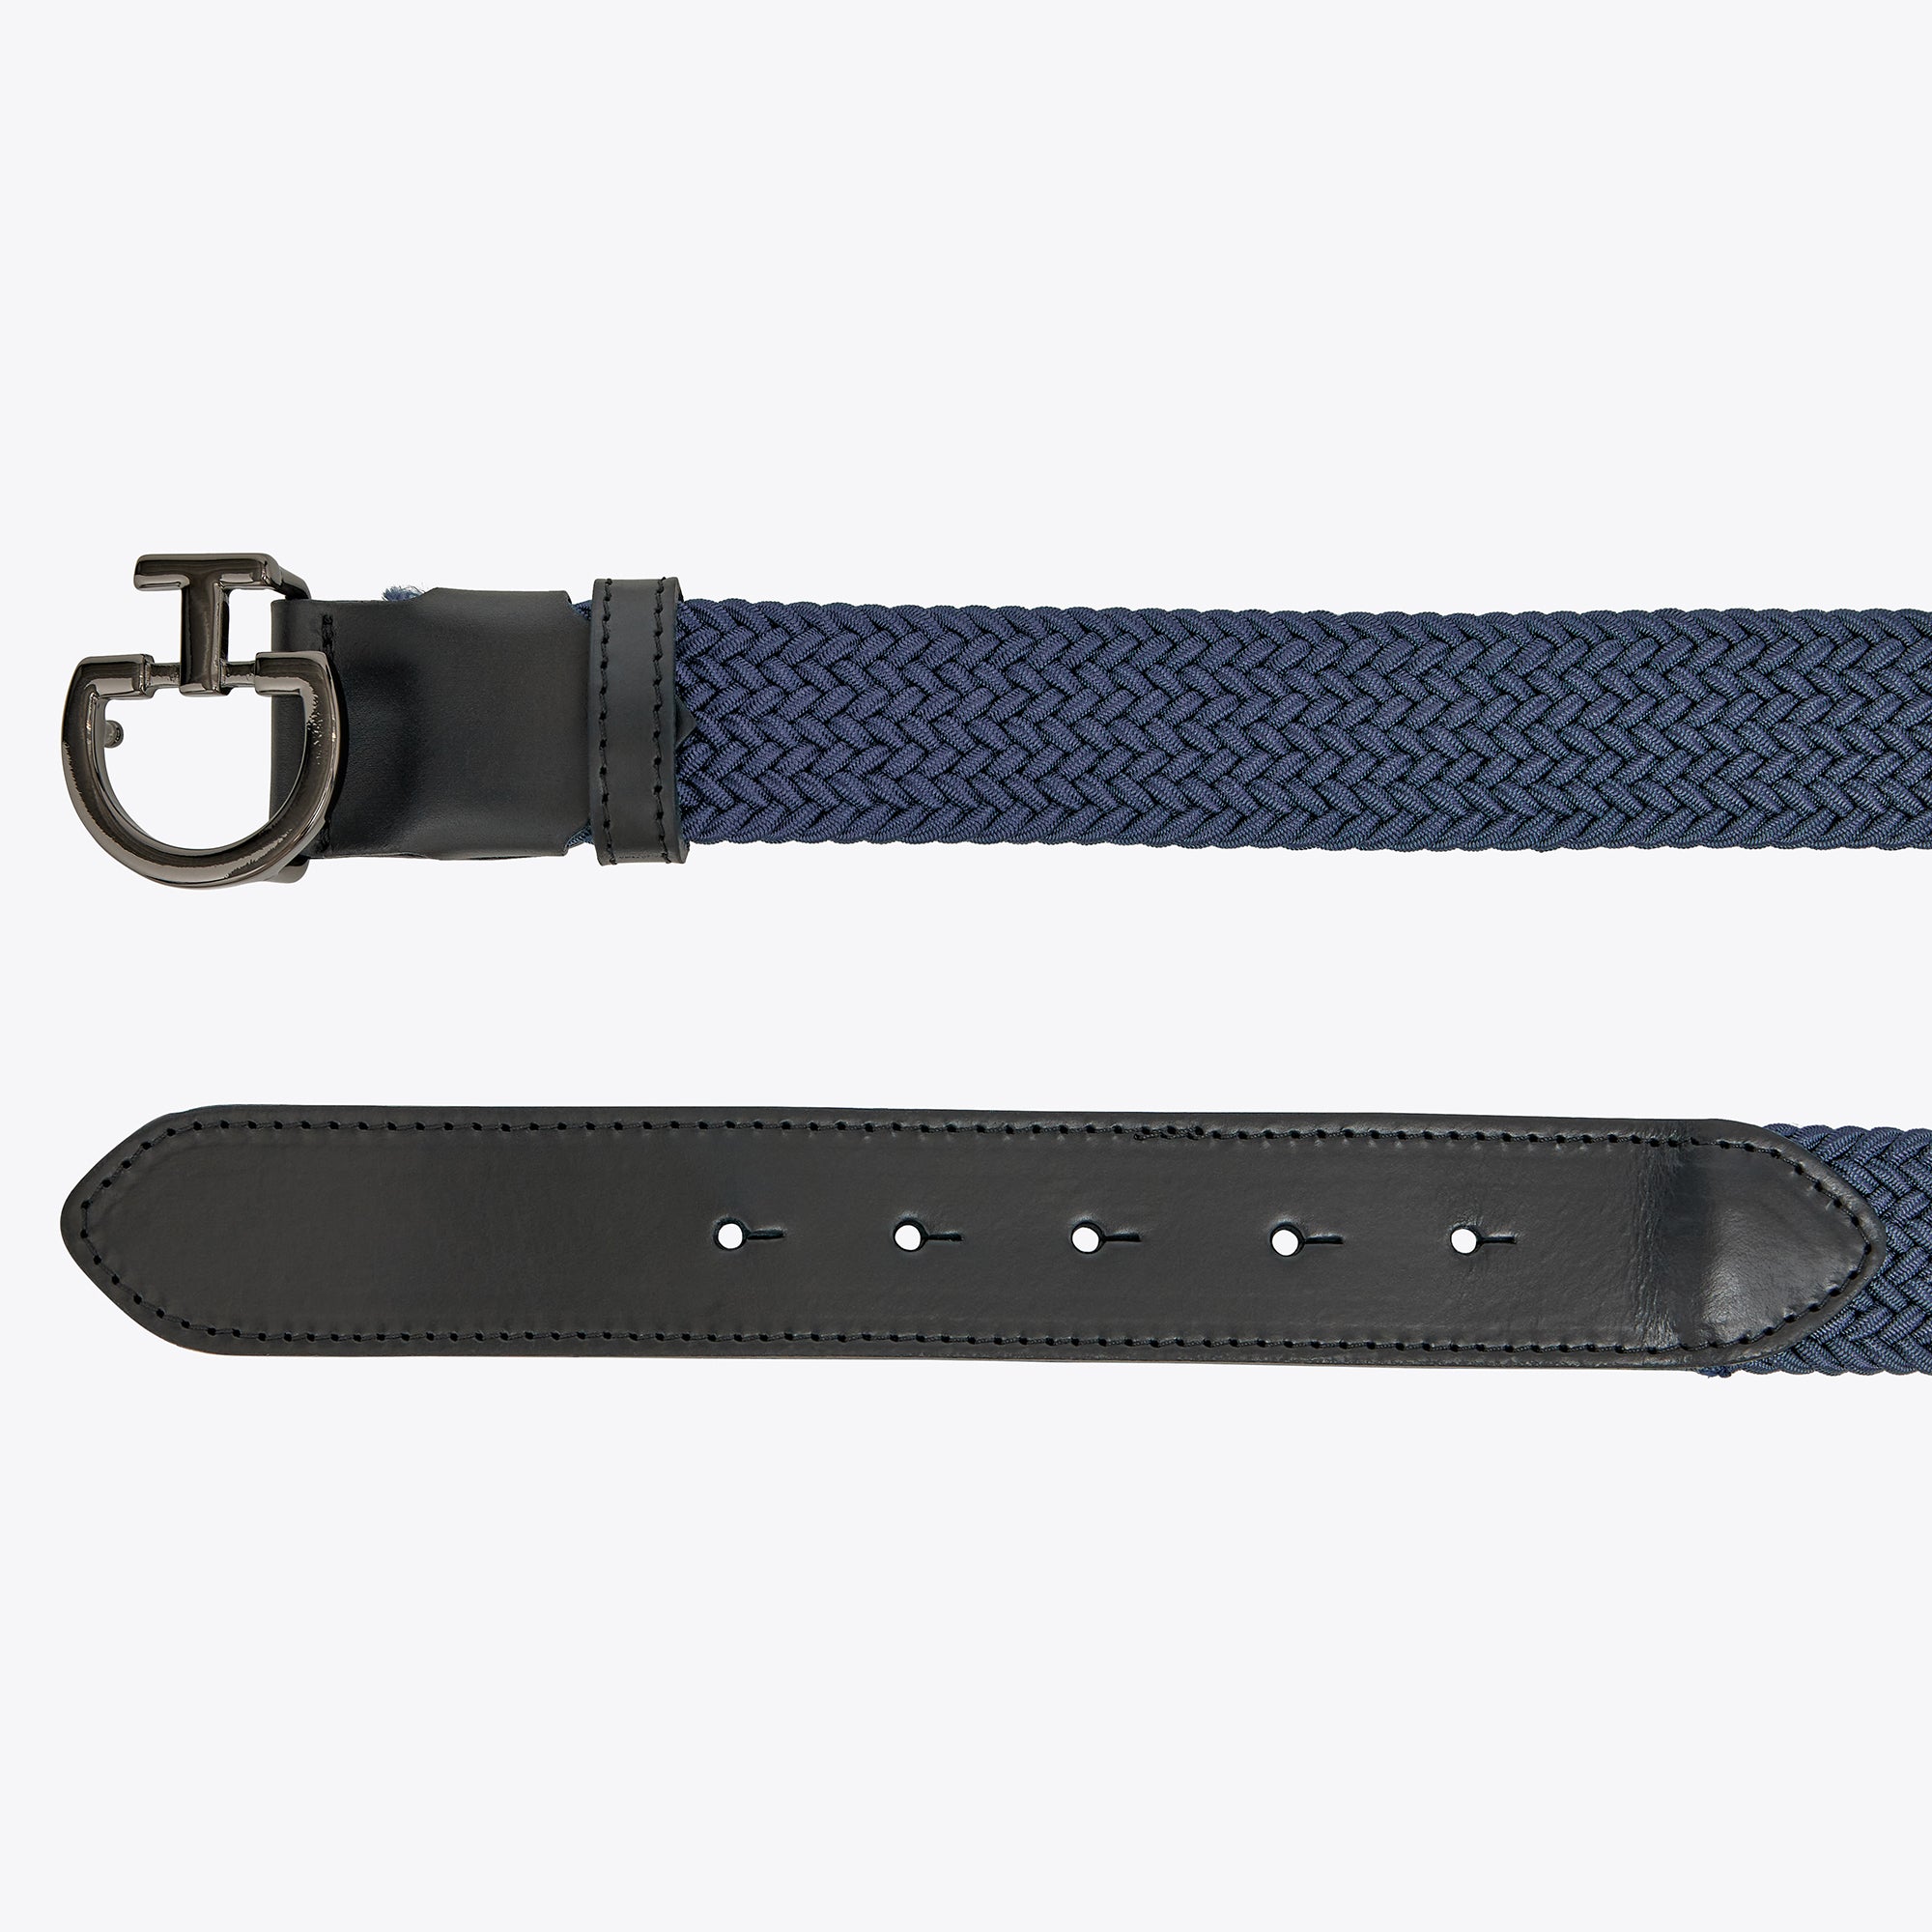 Men's belt in Atlantic Blue / Black